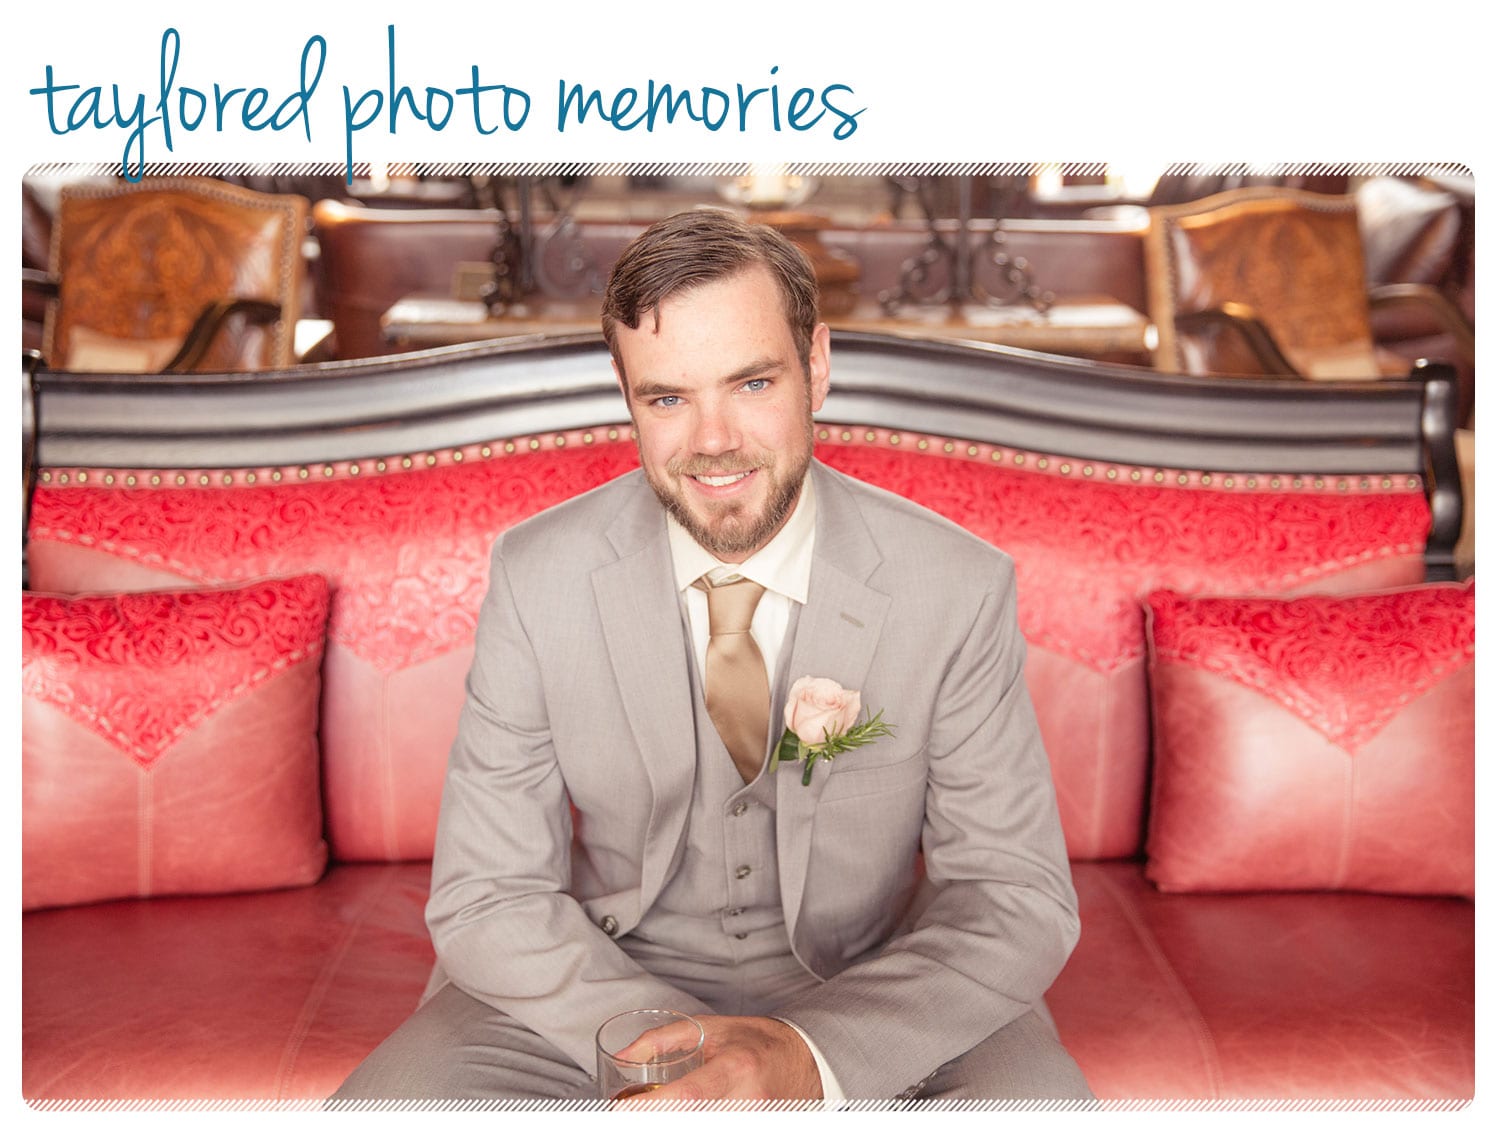 da13 A Cowboy's Dream Bed and Breakfast Wedding in Alamo, NV - Las Vegas Wedding Photographer